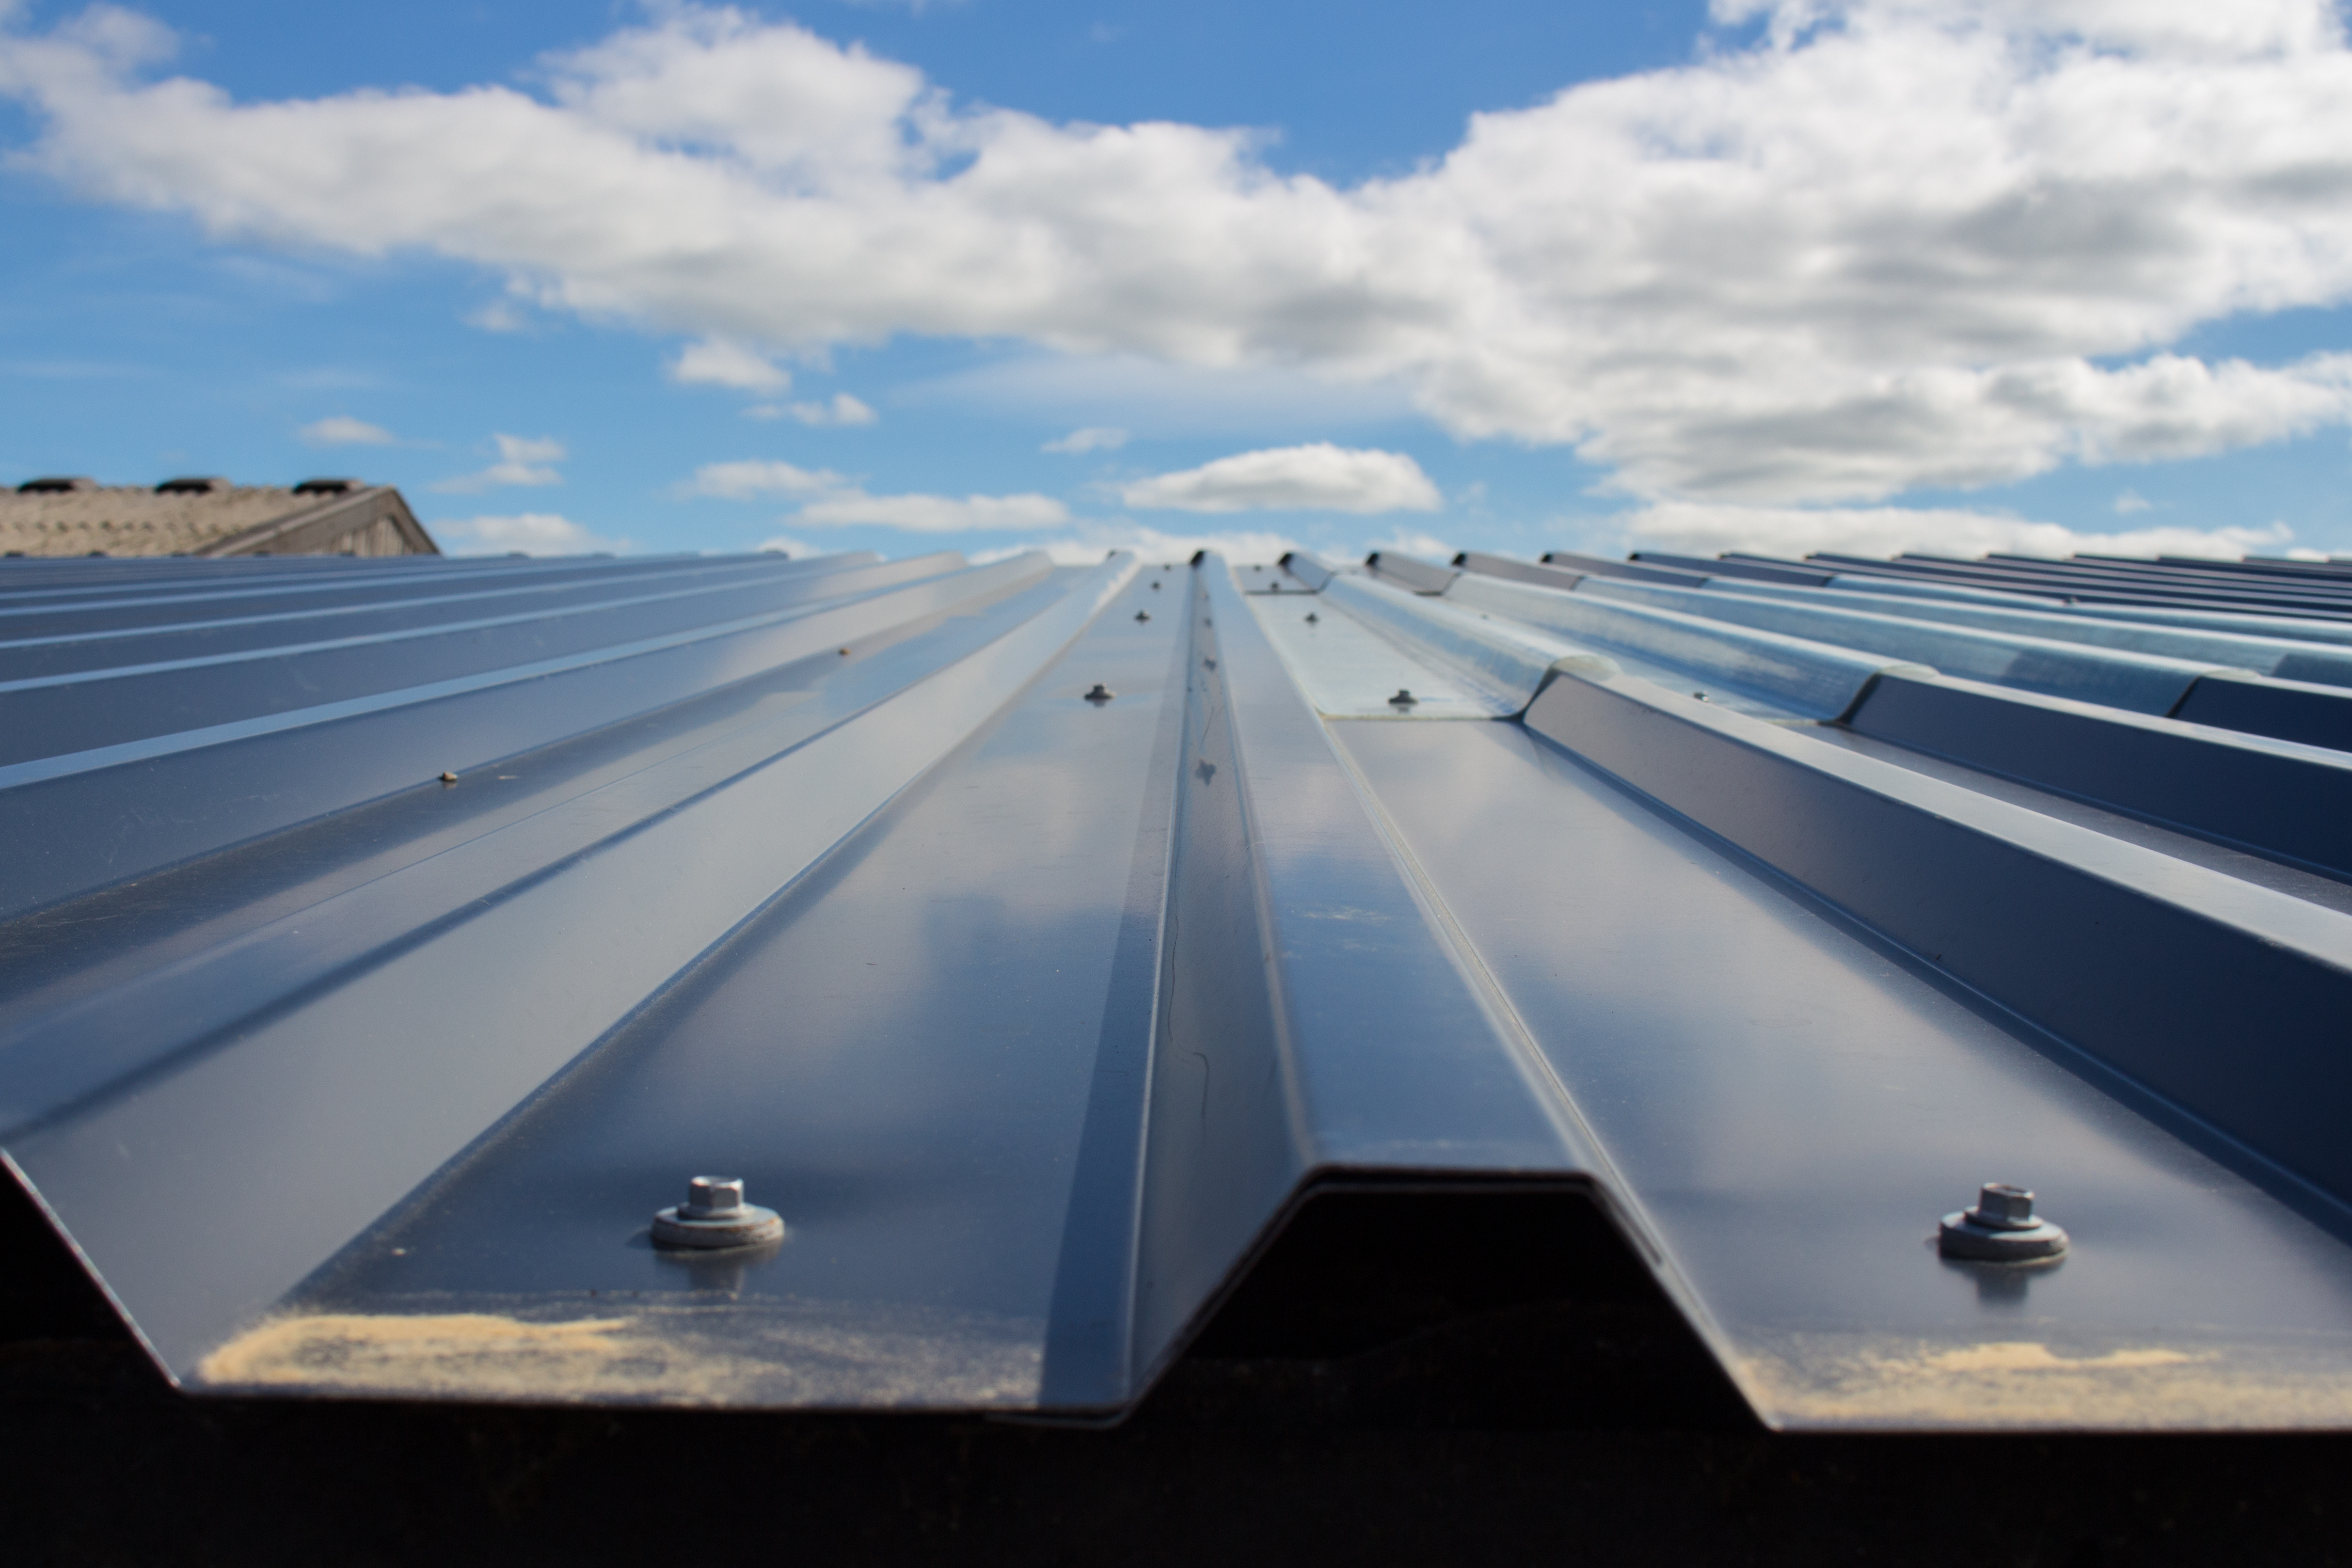 Metal Roof Repair From Goose Creek Metal Roofing Contractors Titan Roofing LLC Call 843-647-3183